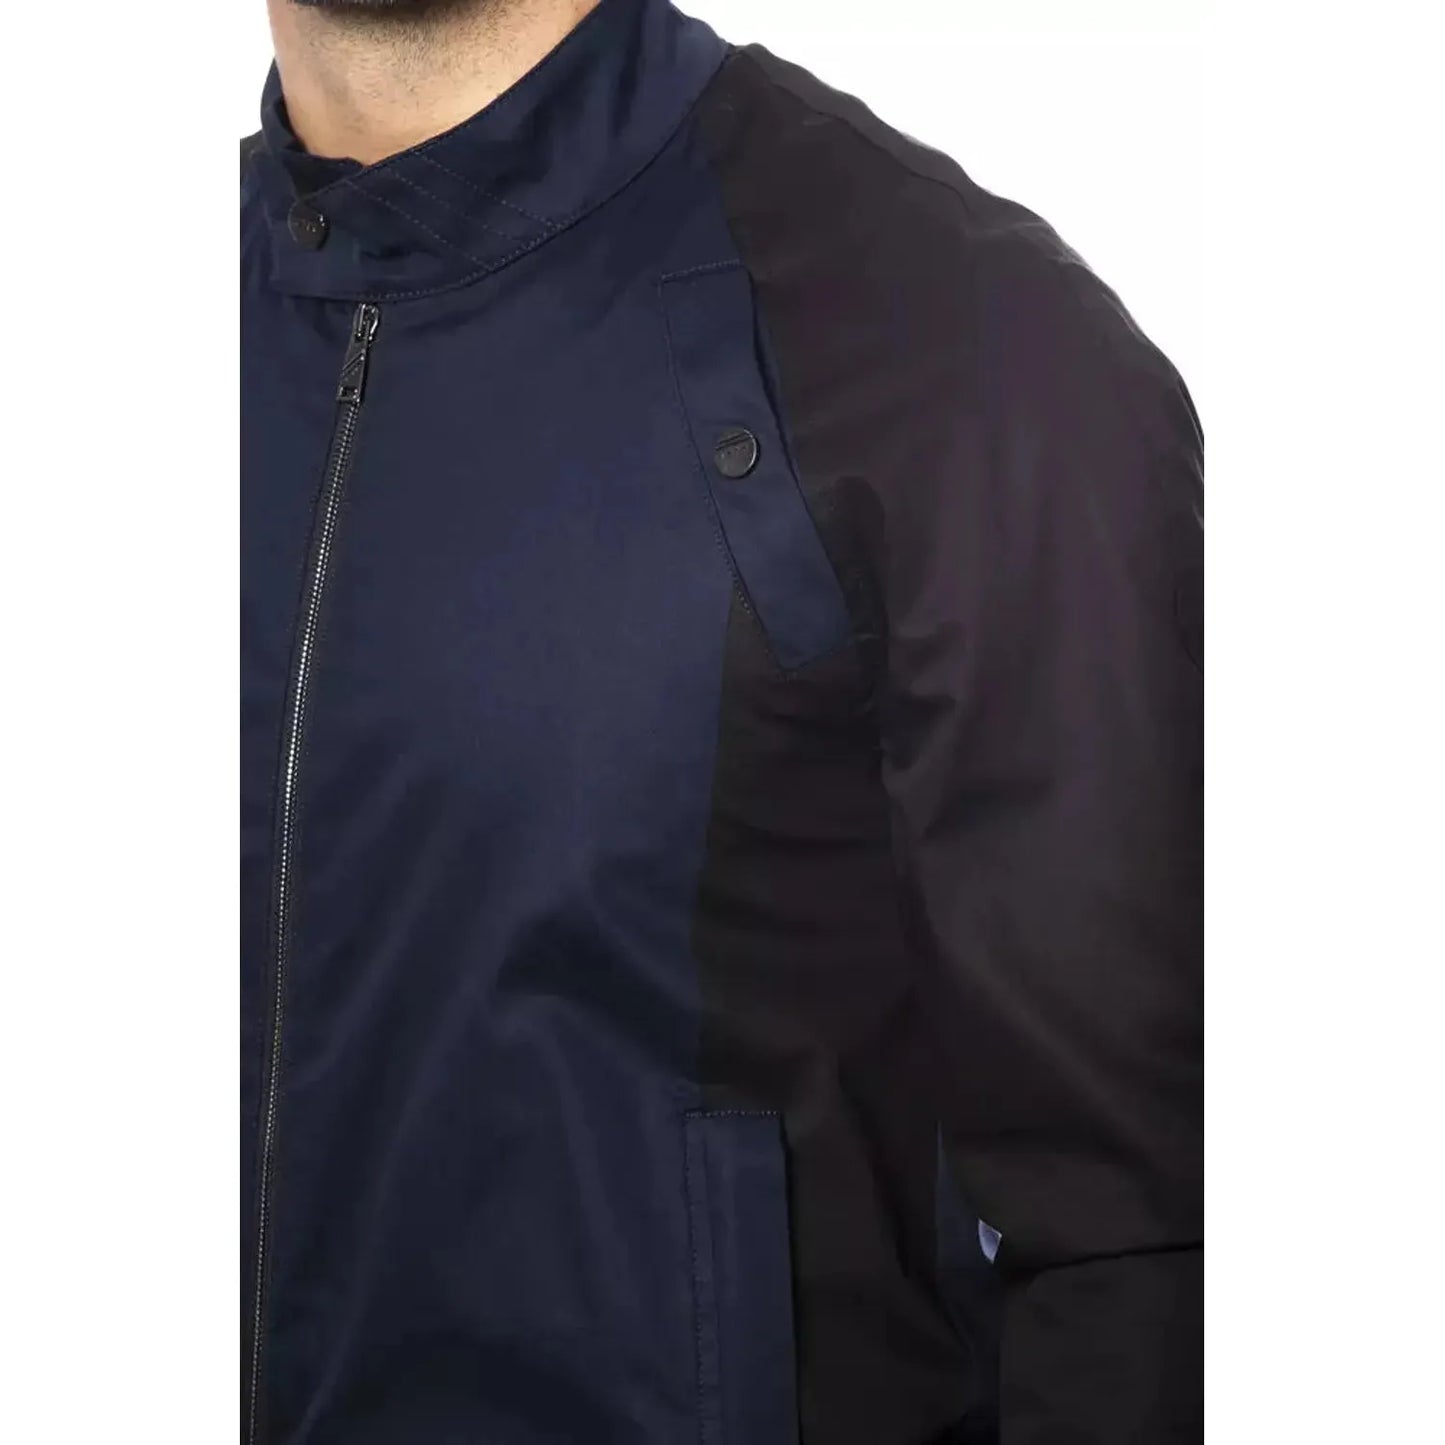 Verri Sleek Blue Bomber Jacket - Men's Couture Coats & Jackets blu-jacket-1 stock_product_image_18318_1303567667-15-7937b37c-b1a.webp